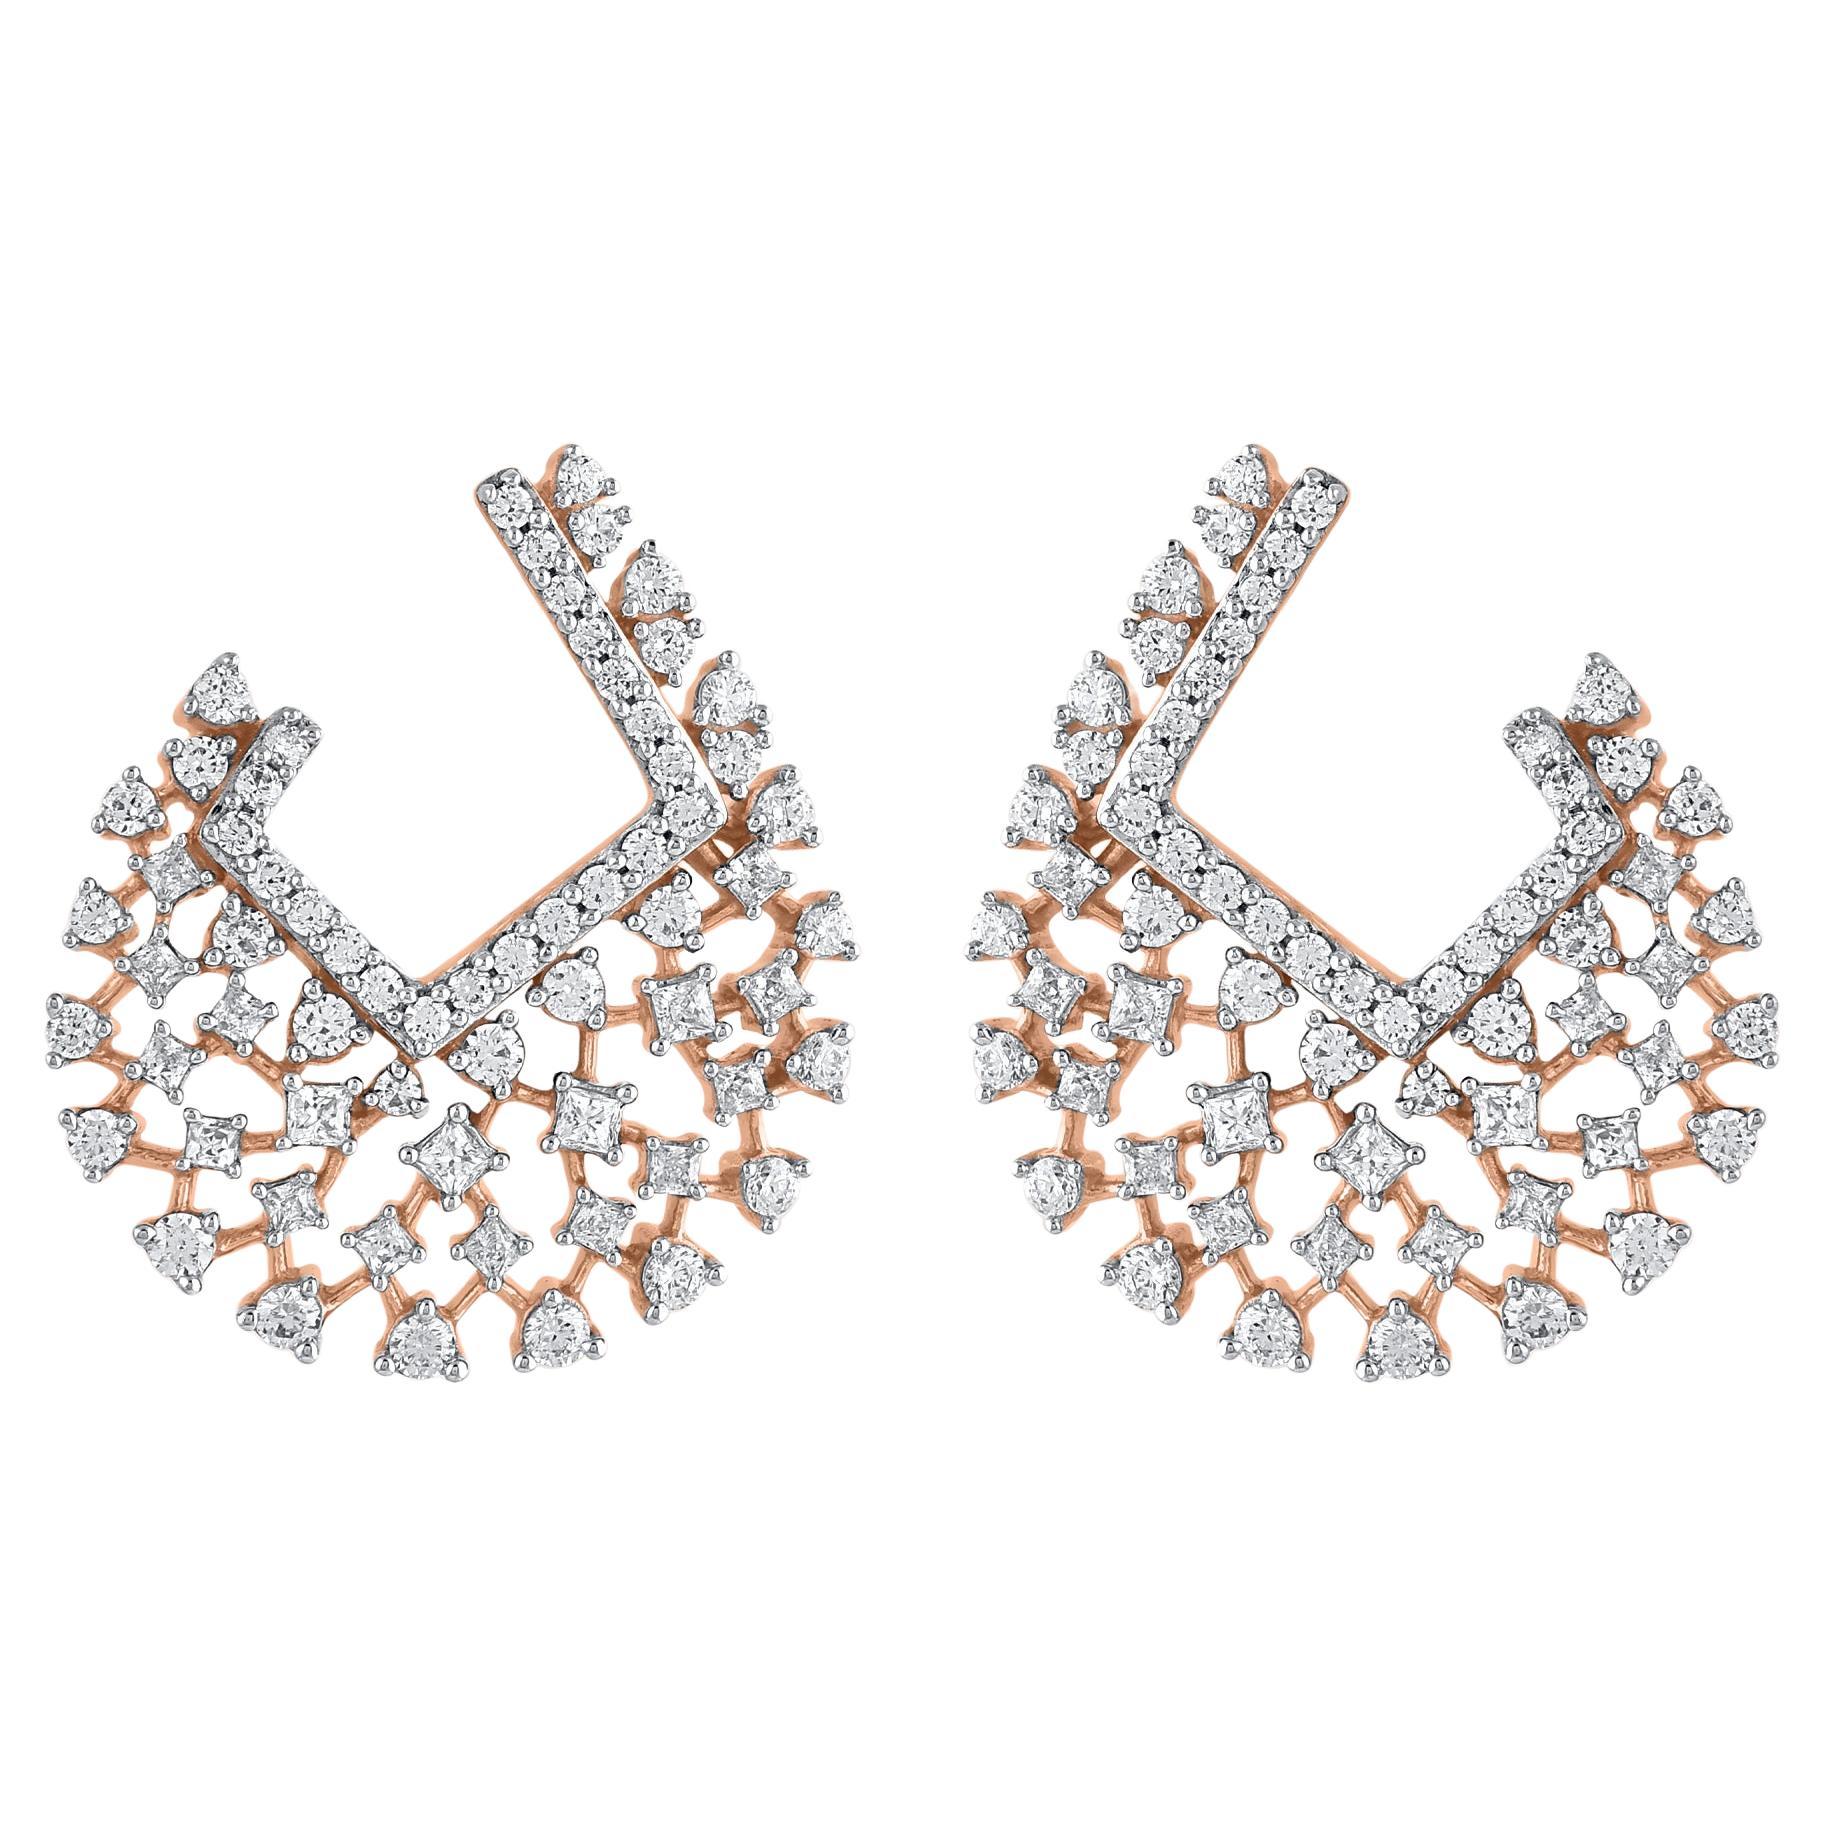 TJD 2.0 Carat Natural Diamonds Designer Stud Earrings in 14 Karat Rose Gold